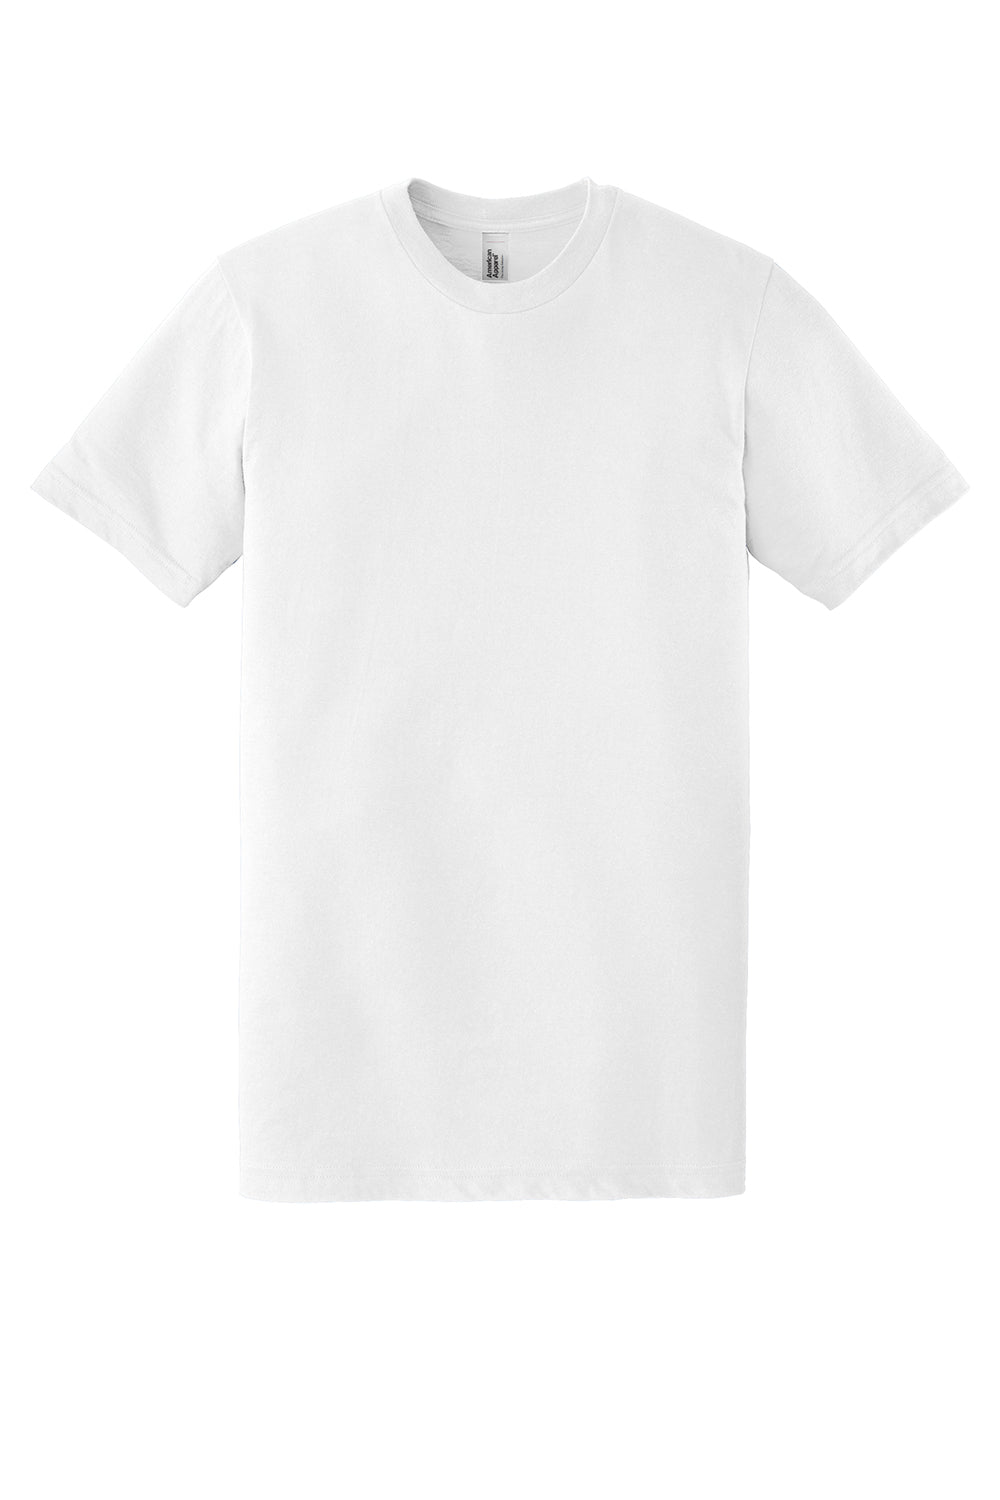 American Apparel 2001 Mens Fine Jersey Short Sleeve Crewneck T-Shirt White Flat Front